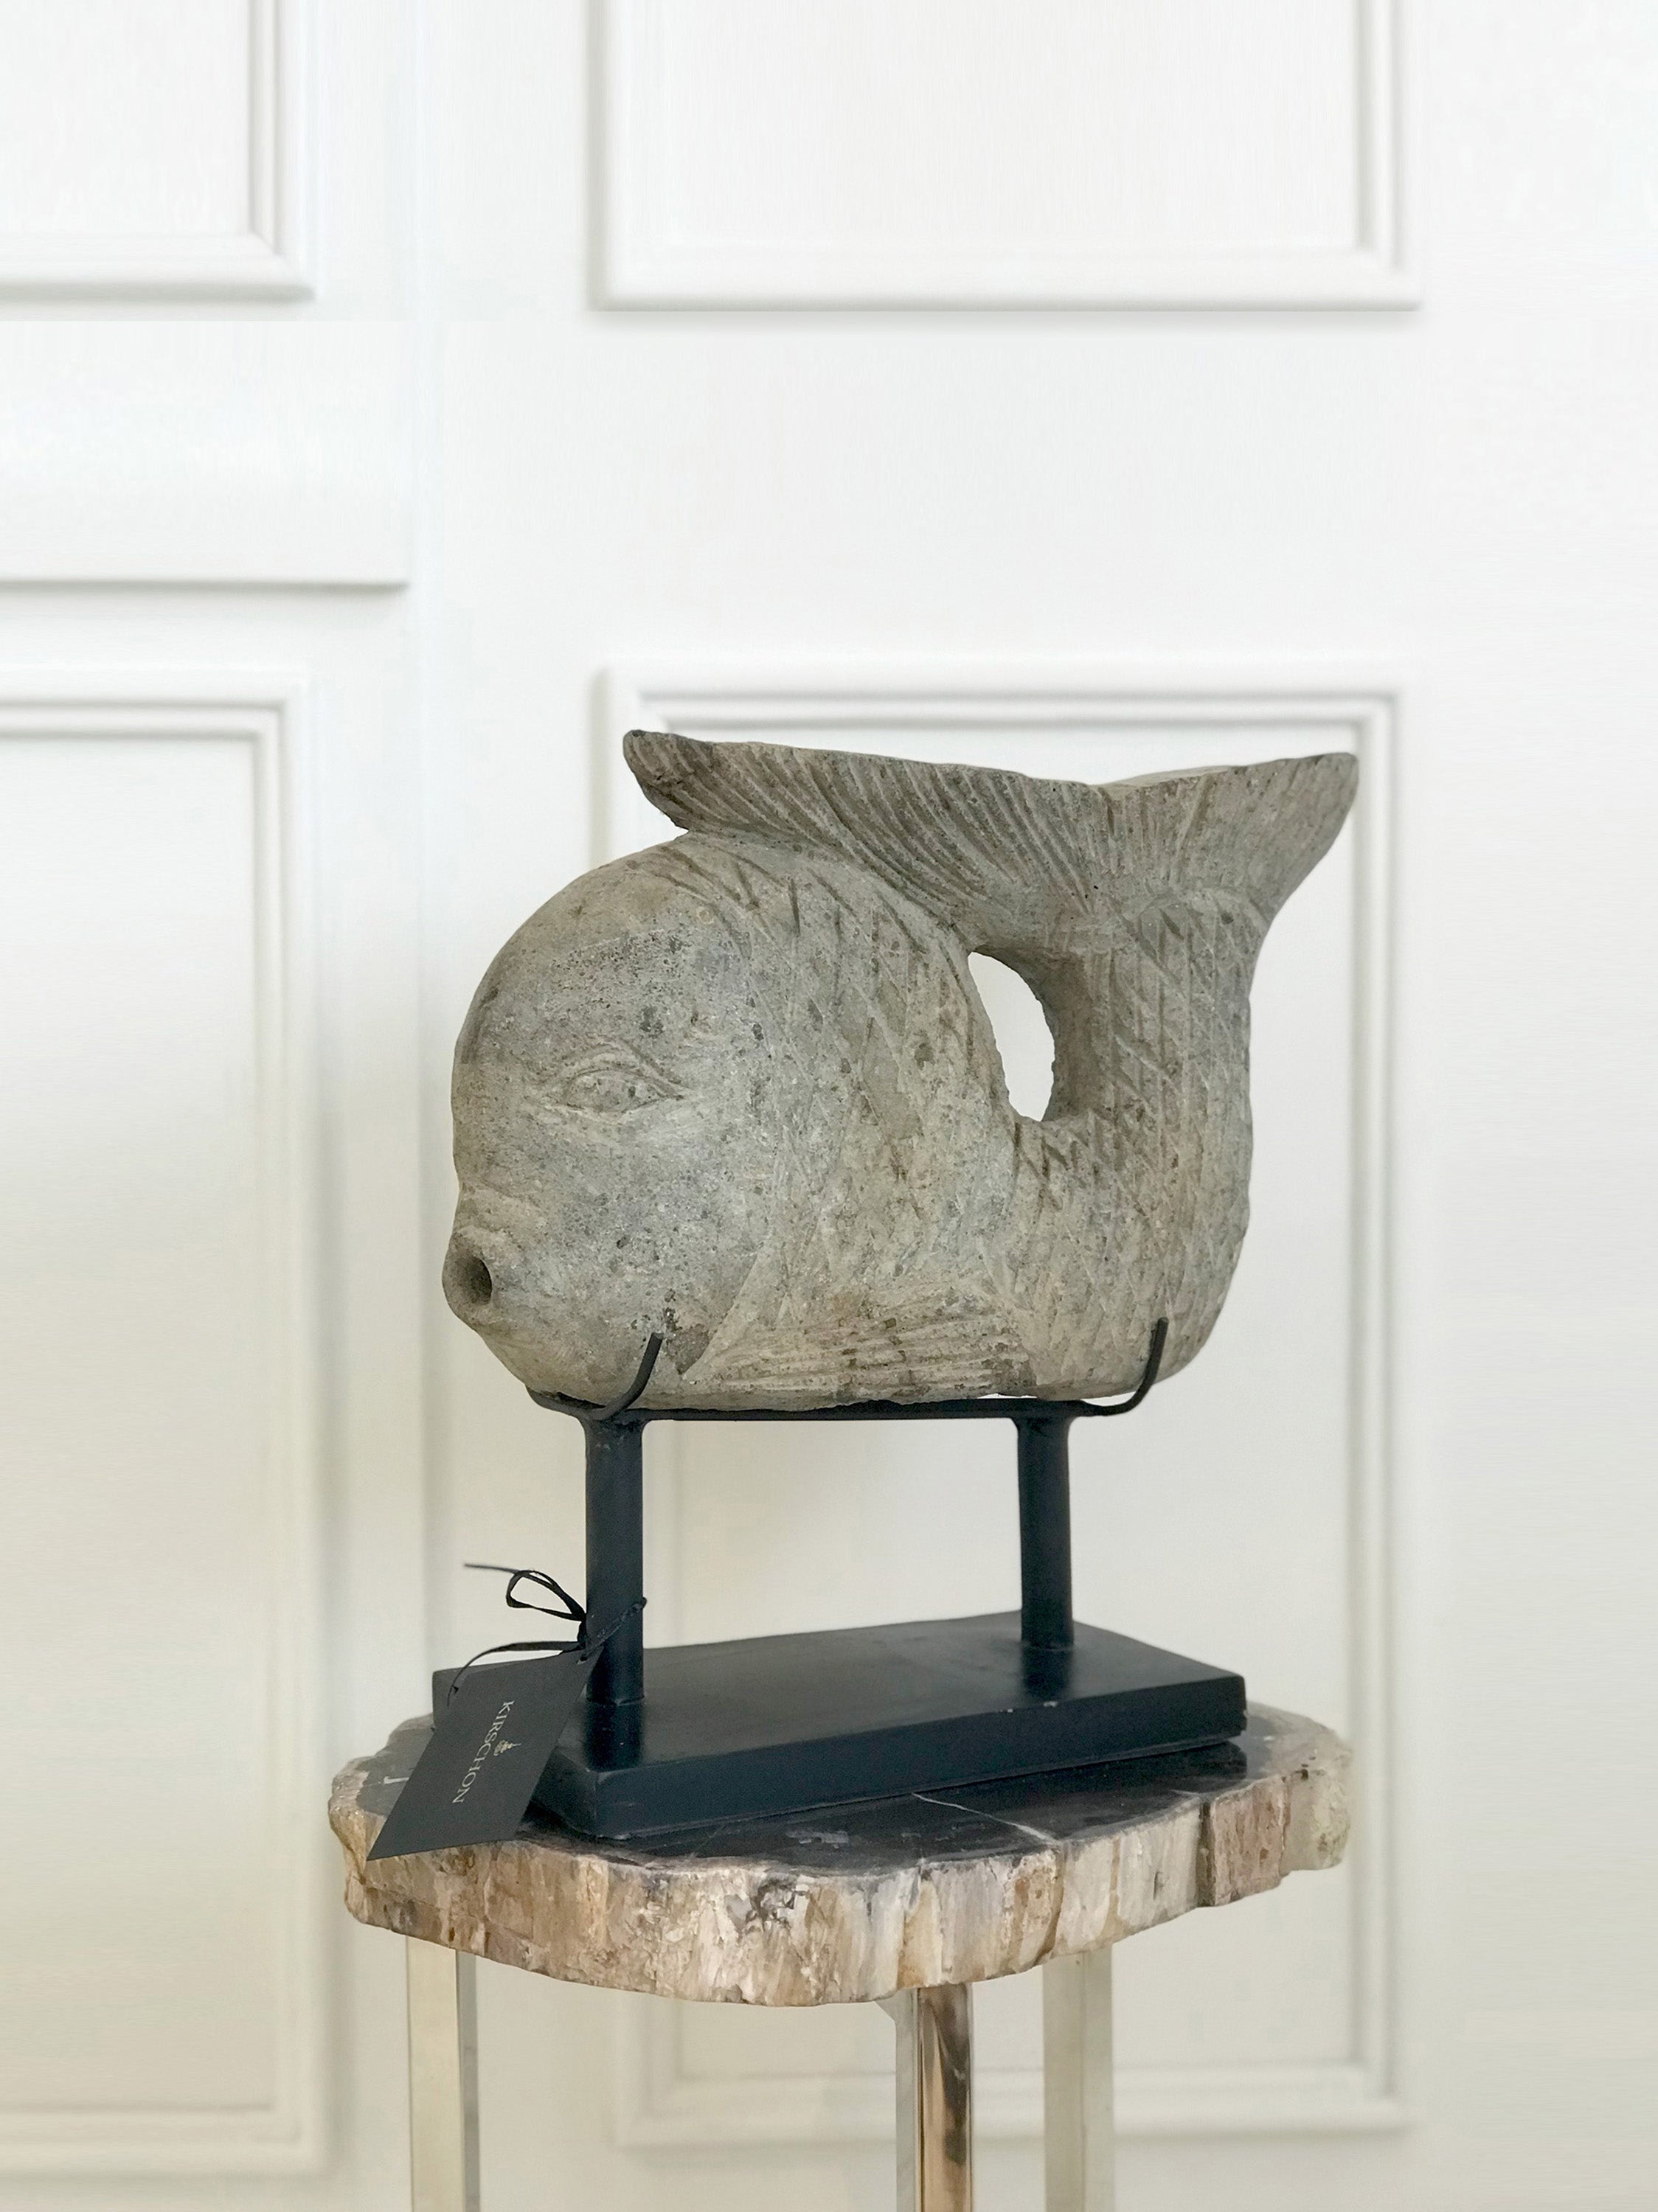 Ikan stone fish statue - Asian Art from Kirschon